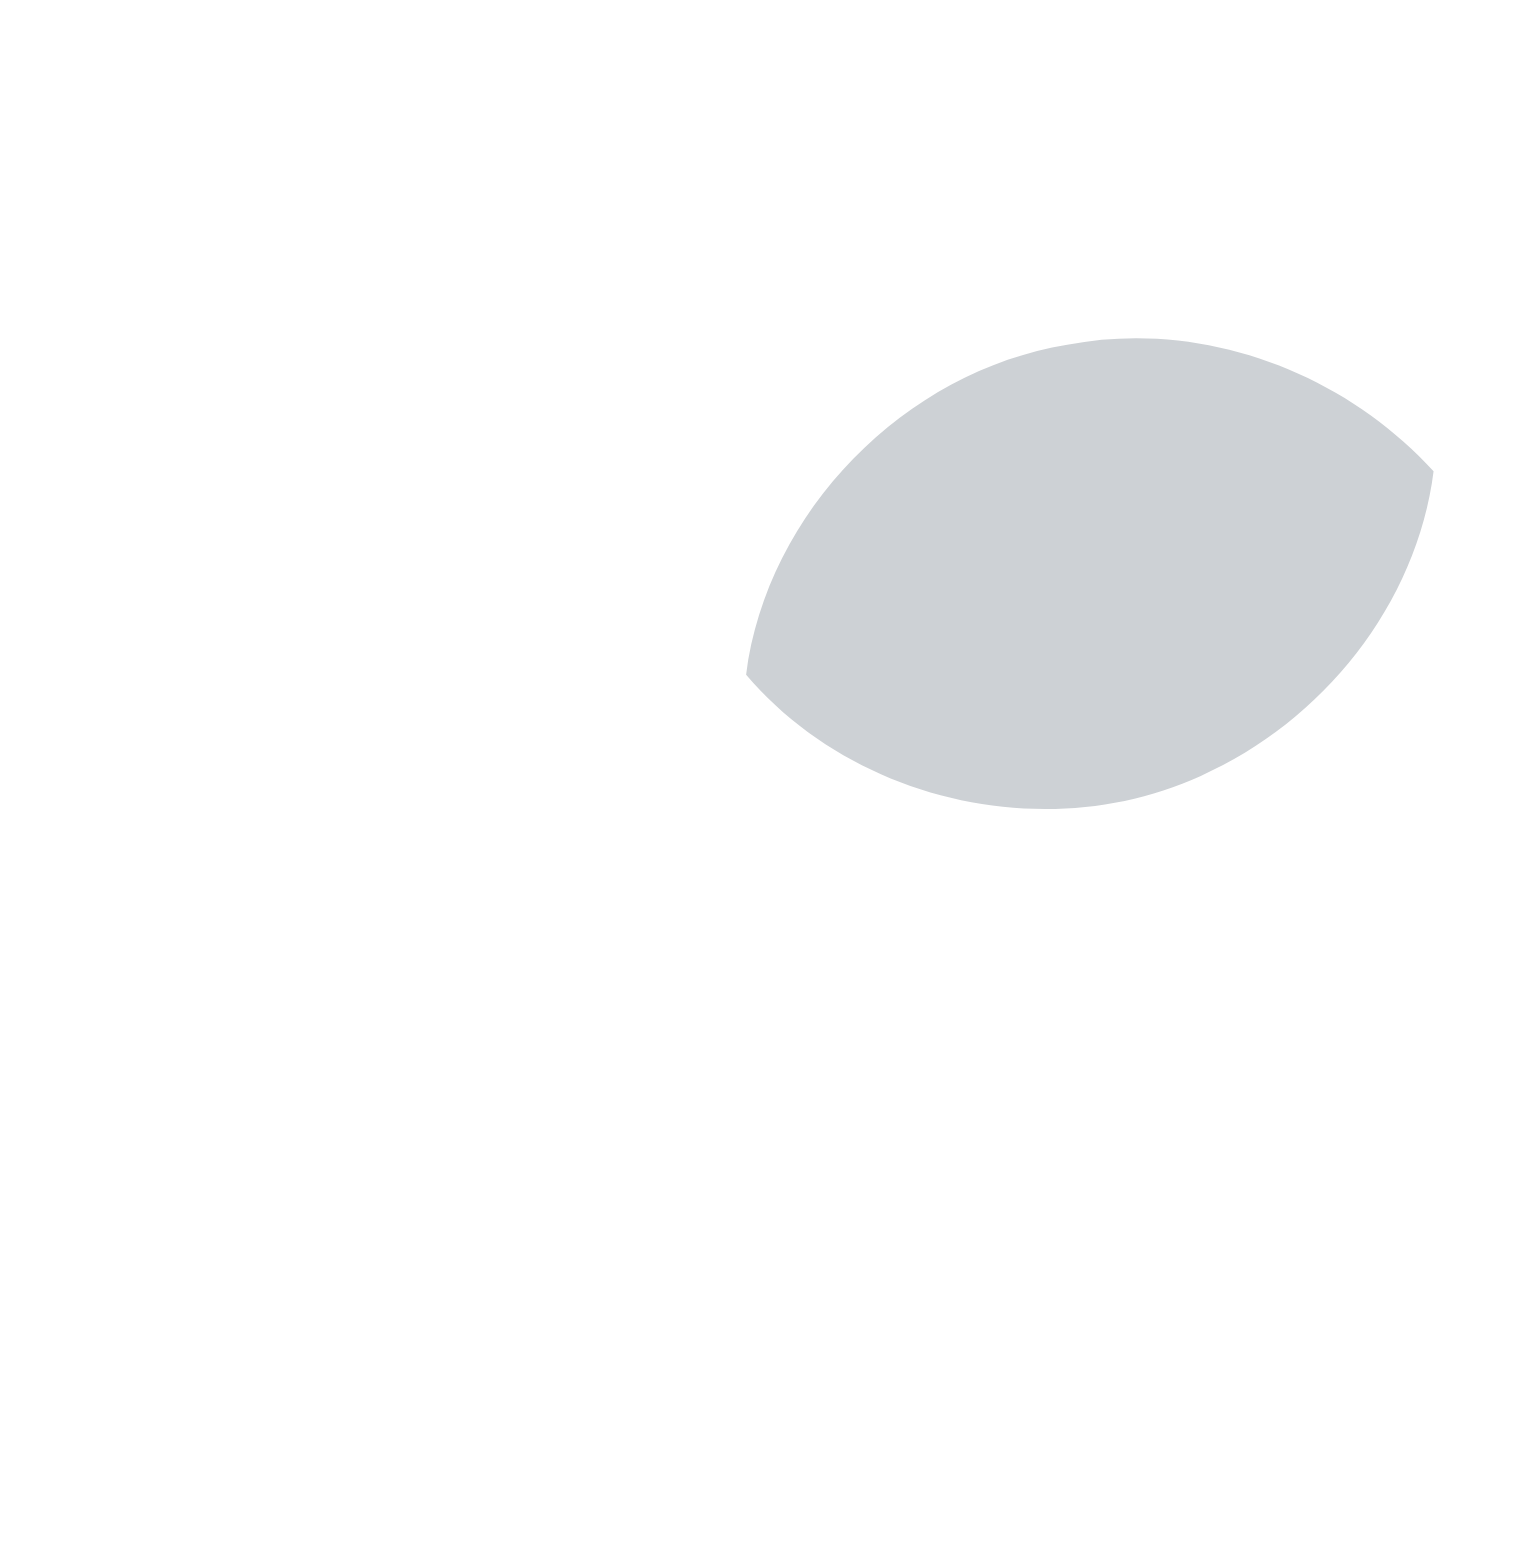 Lightbridge Corporation logo in transparent PNG and vectorized SVG formats